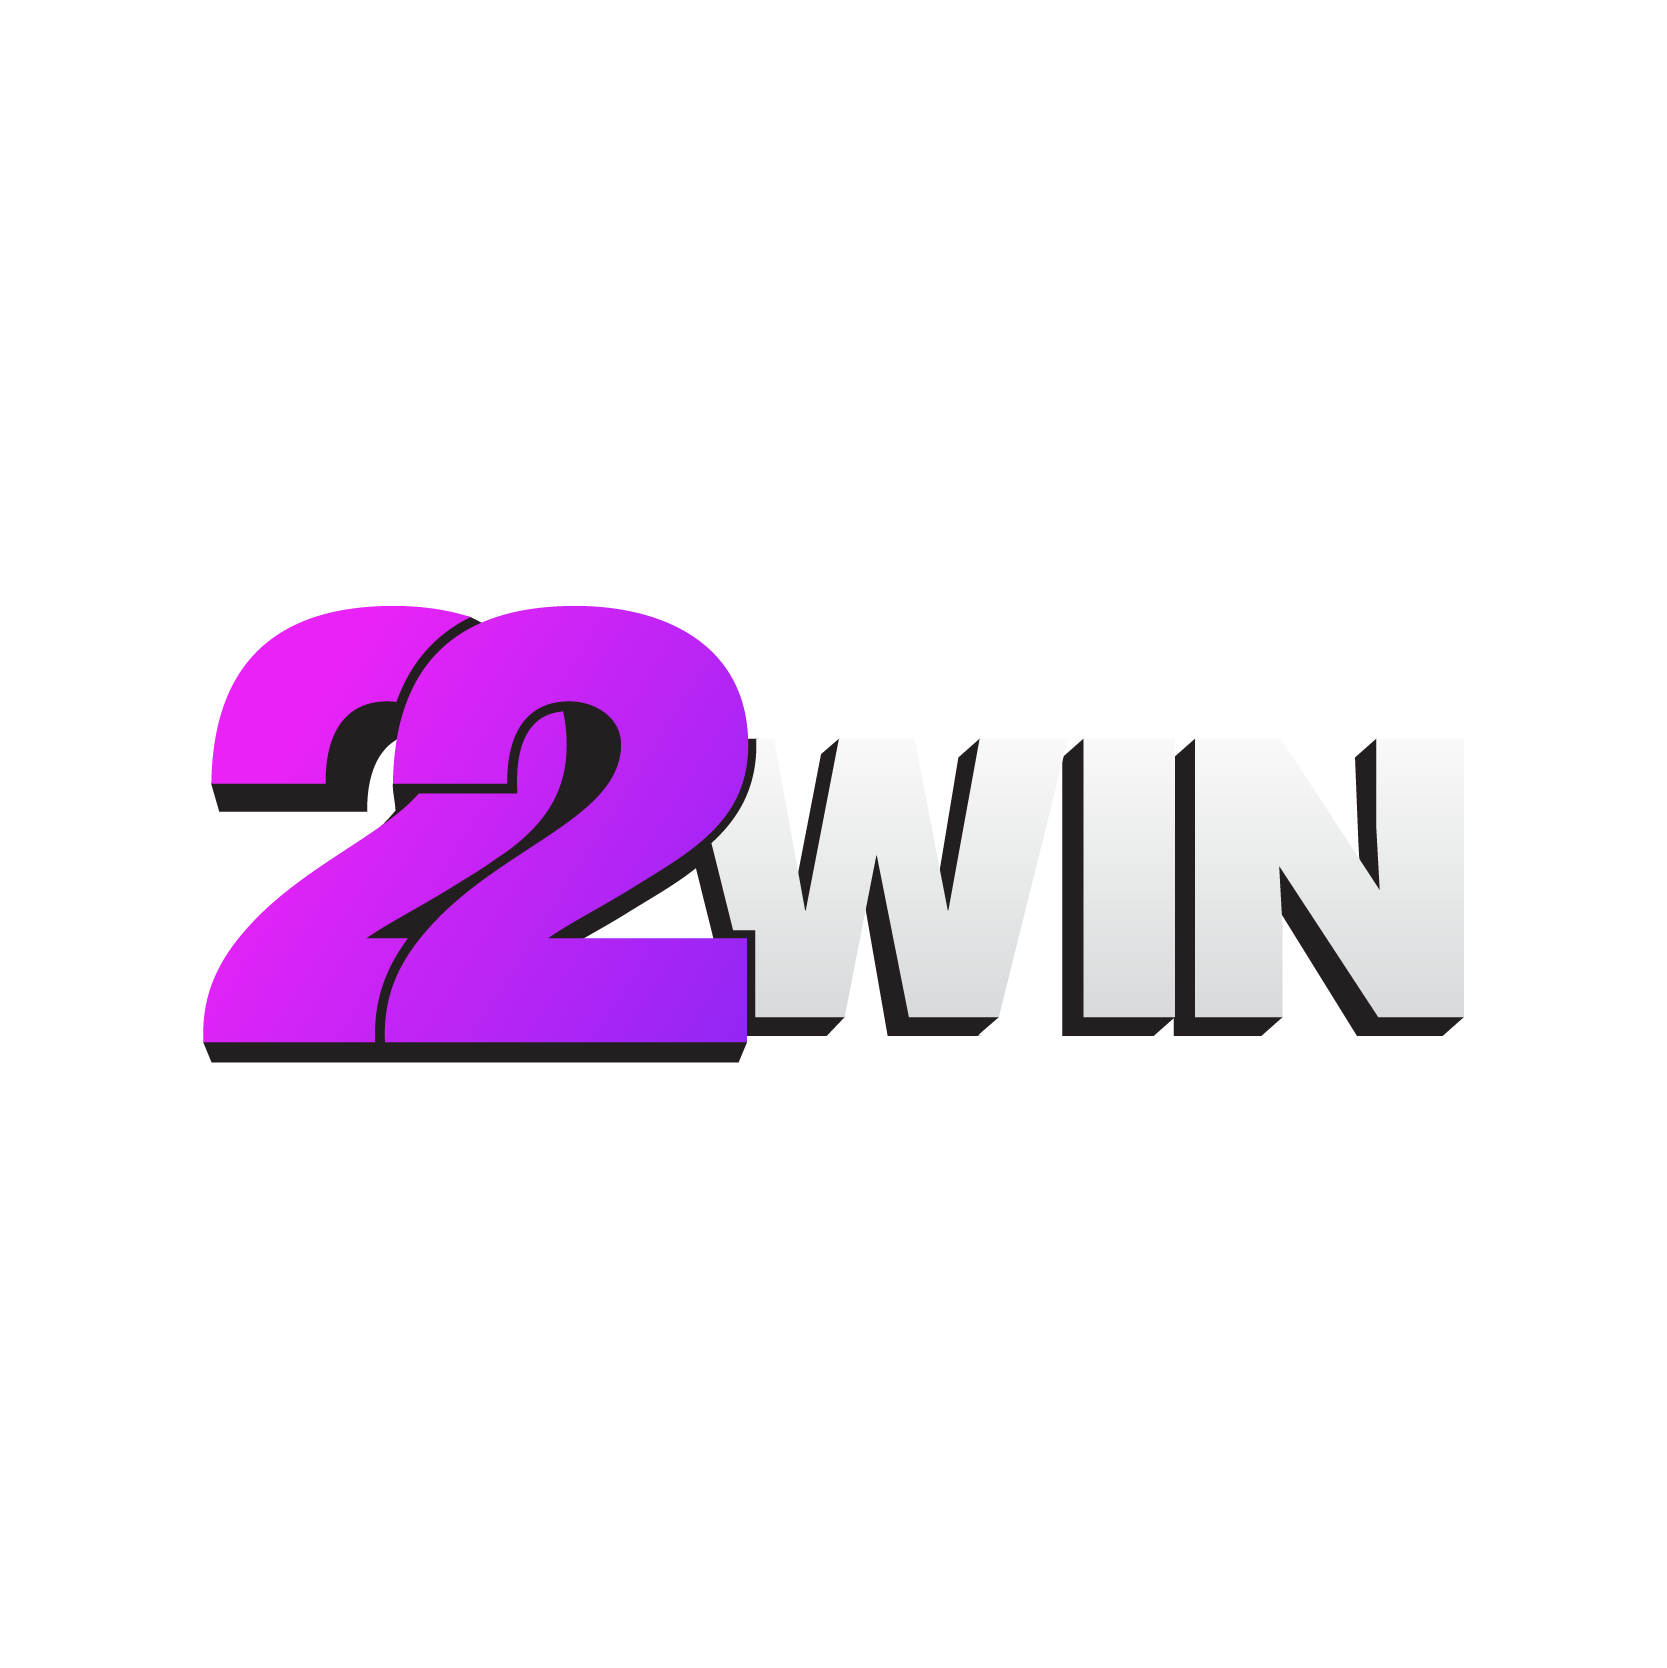 22WIN Logo